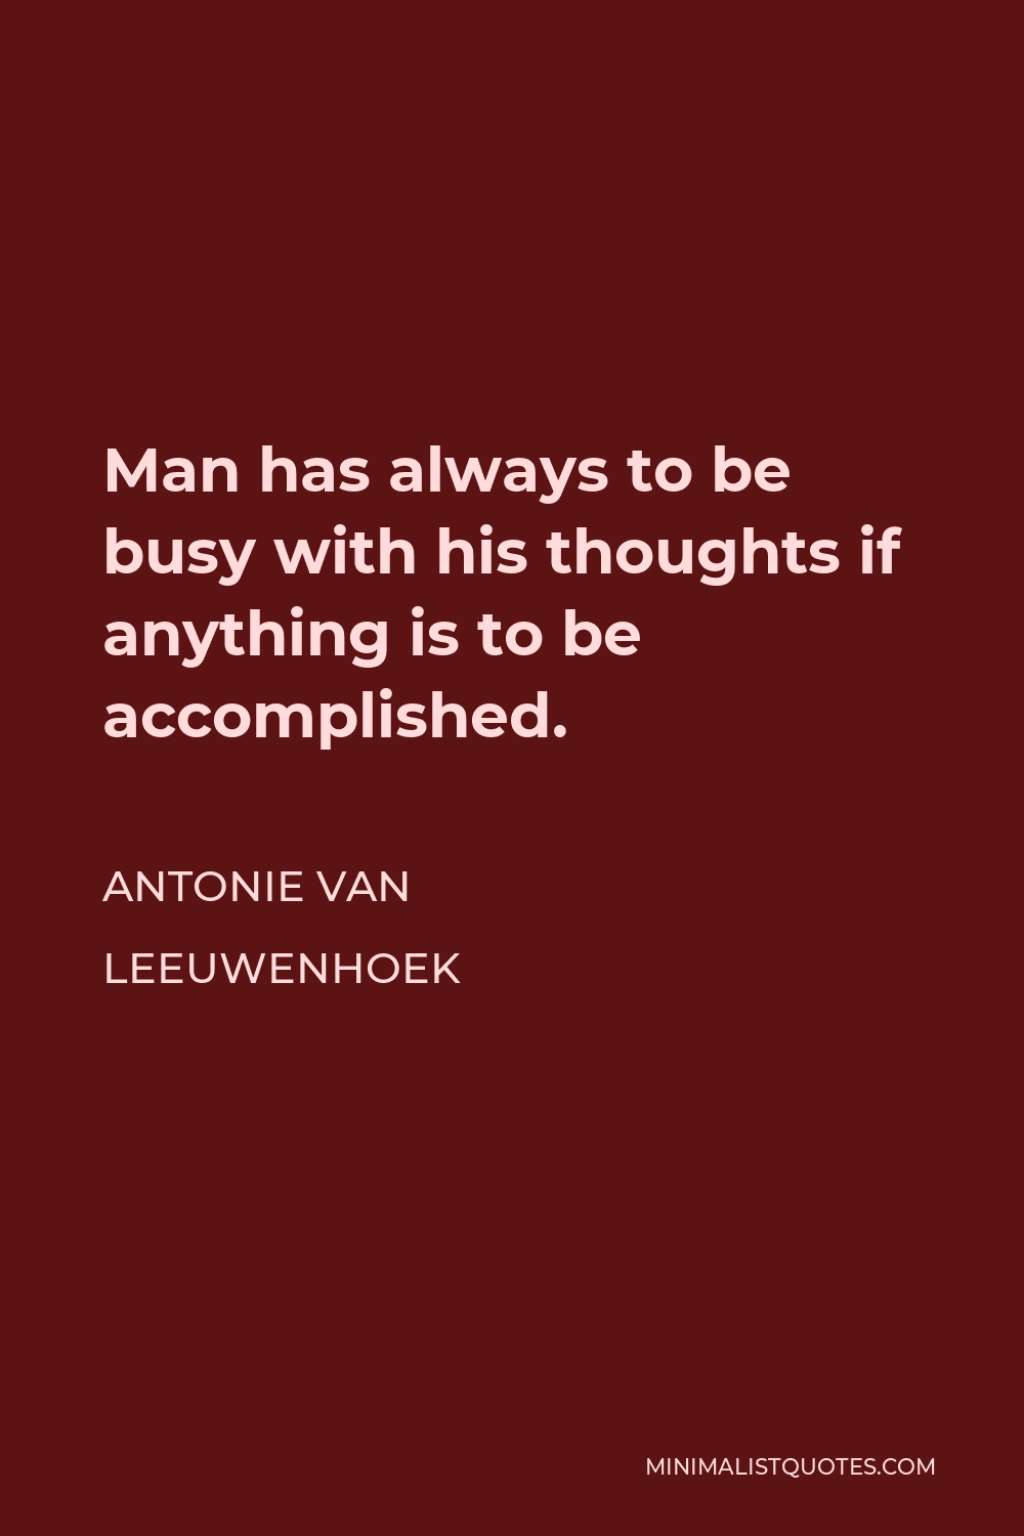 Picture of: Antonie van Leeuwenhoek Quote: Man has always to be busy with his